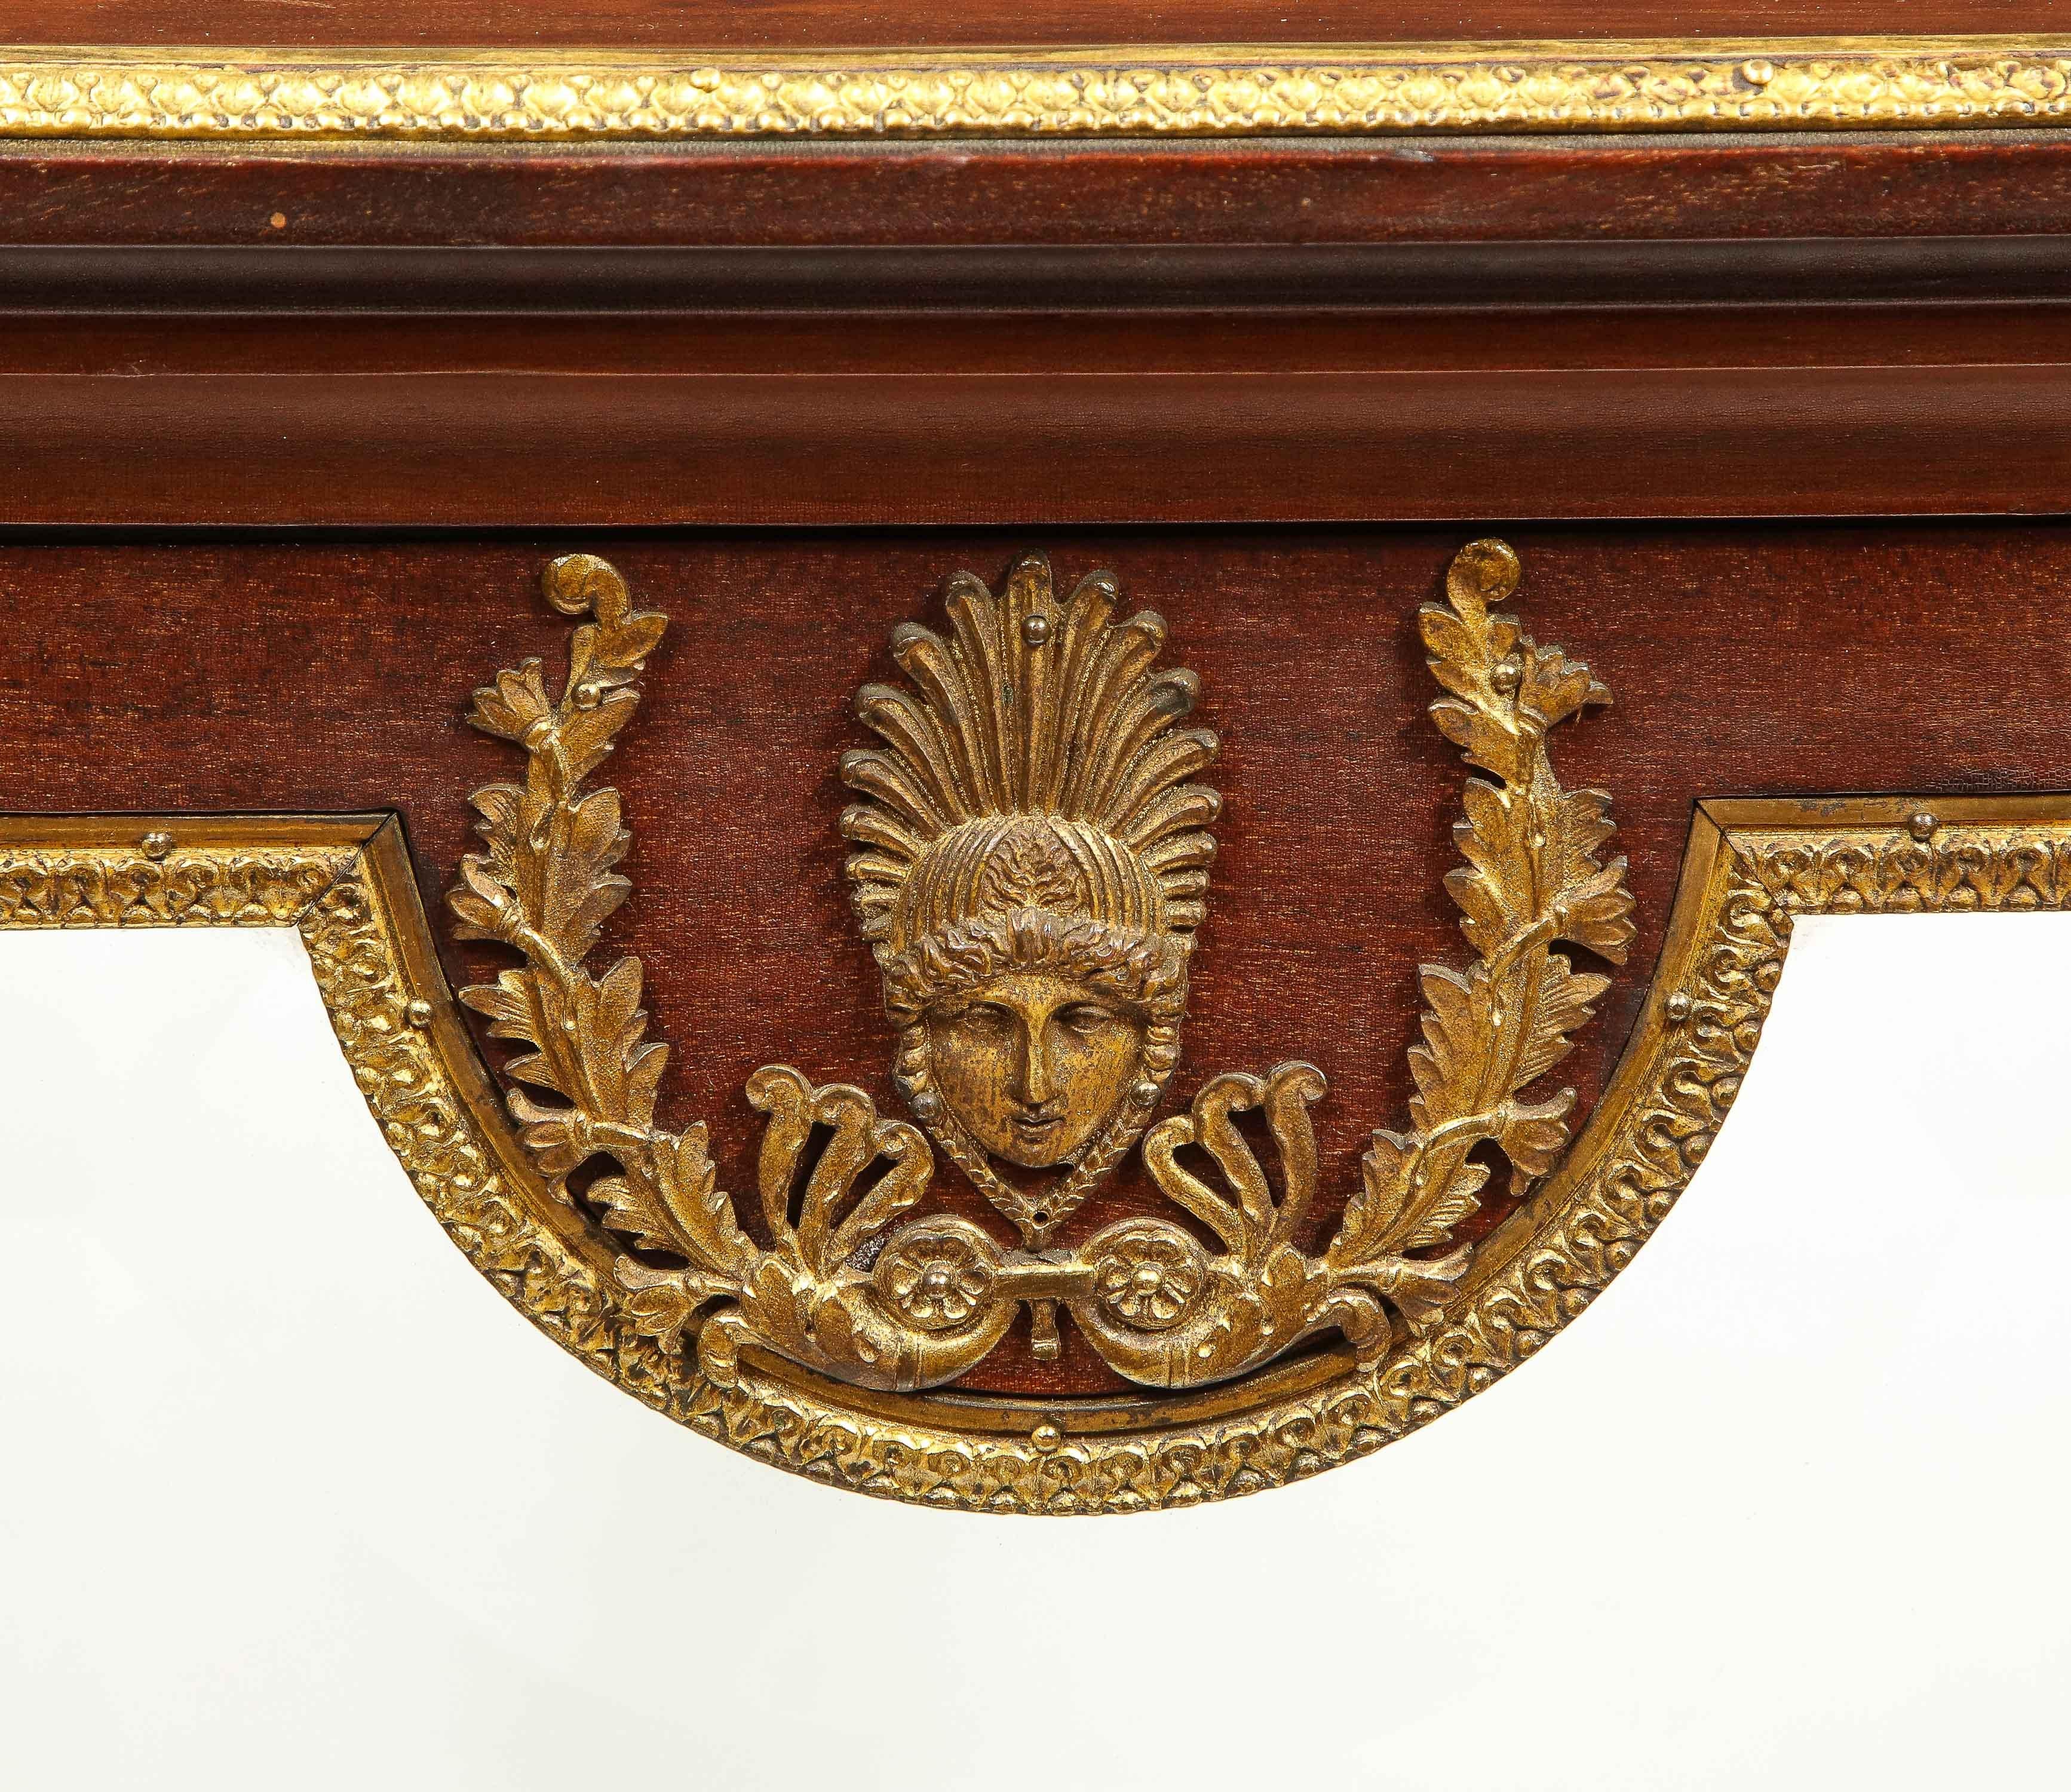 French Empire Ormolu-Mounted Vitrine Cabinet Pedestal, Circa 1840 For Sale 2